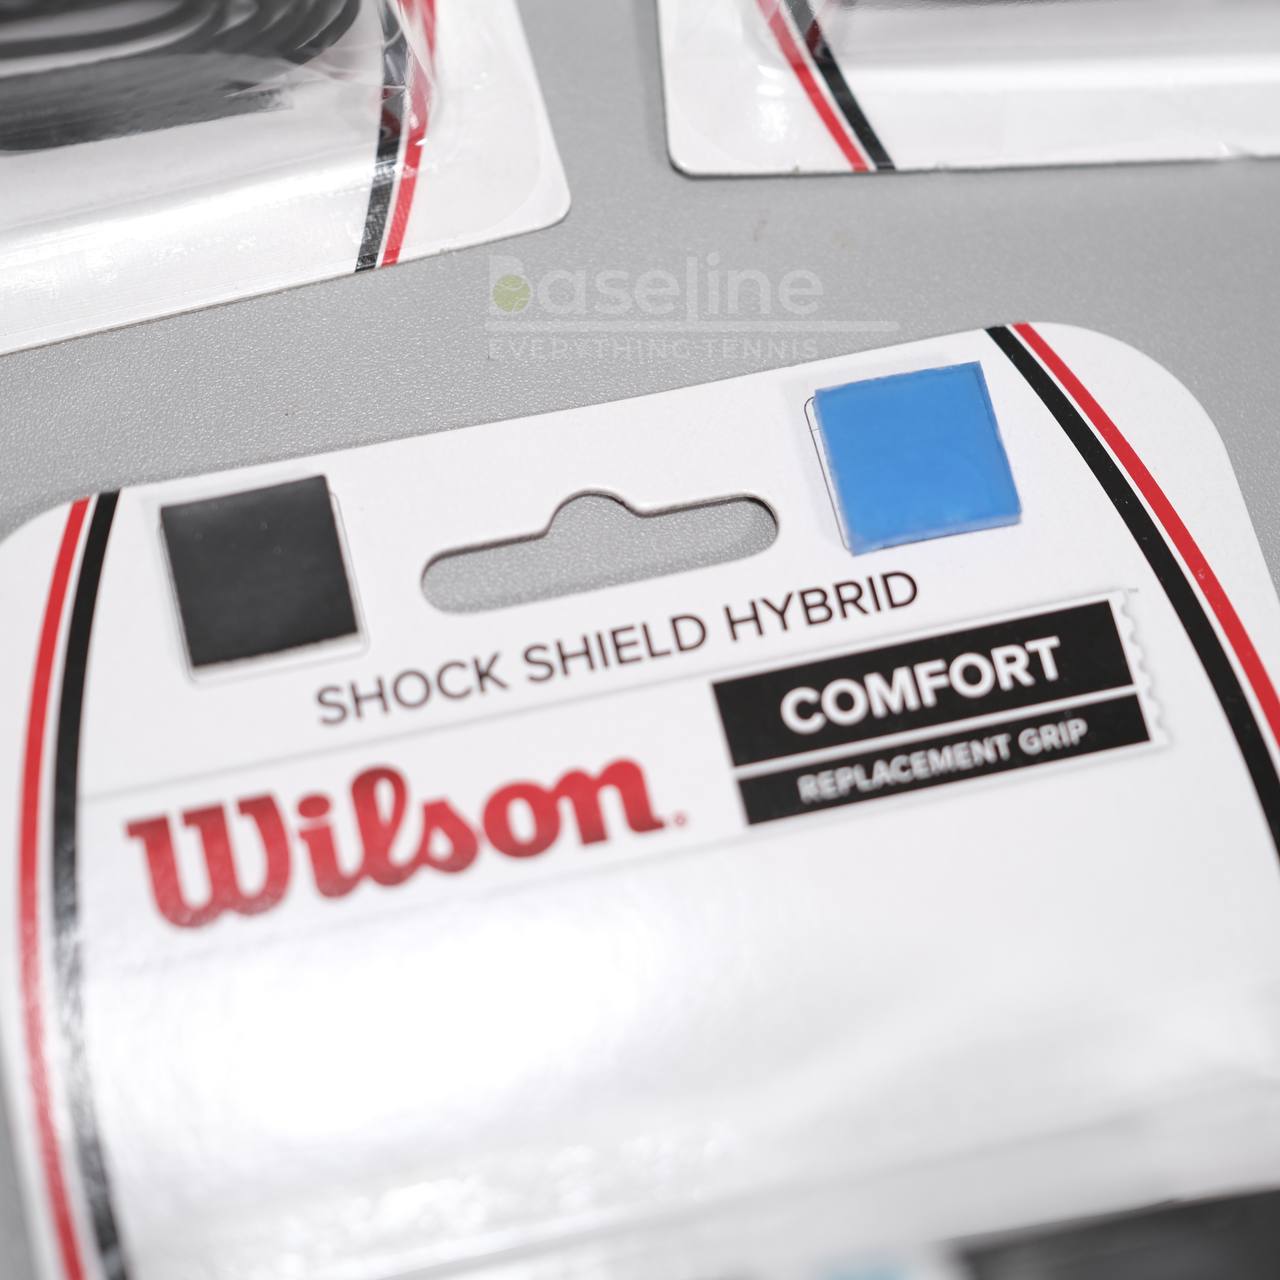 Wilson Shock Shield Hybrid Replacement Grip